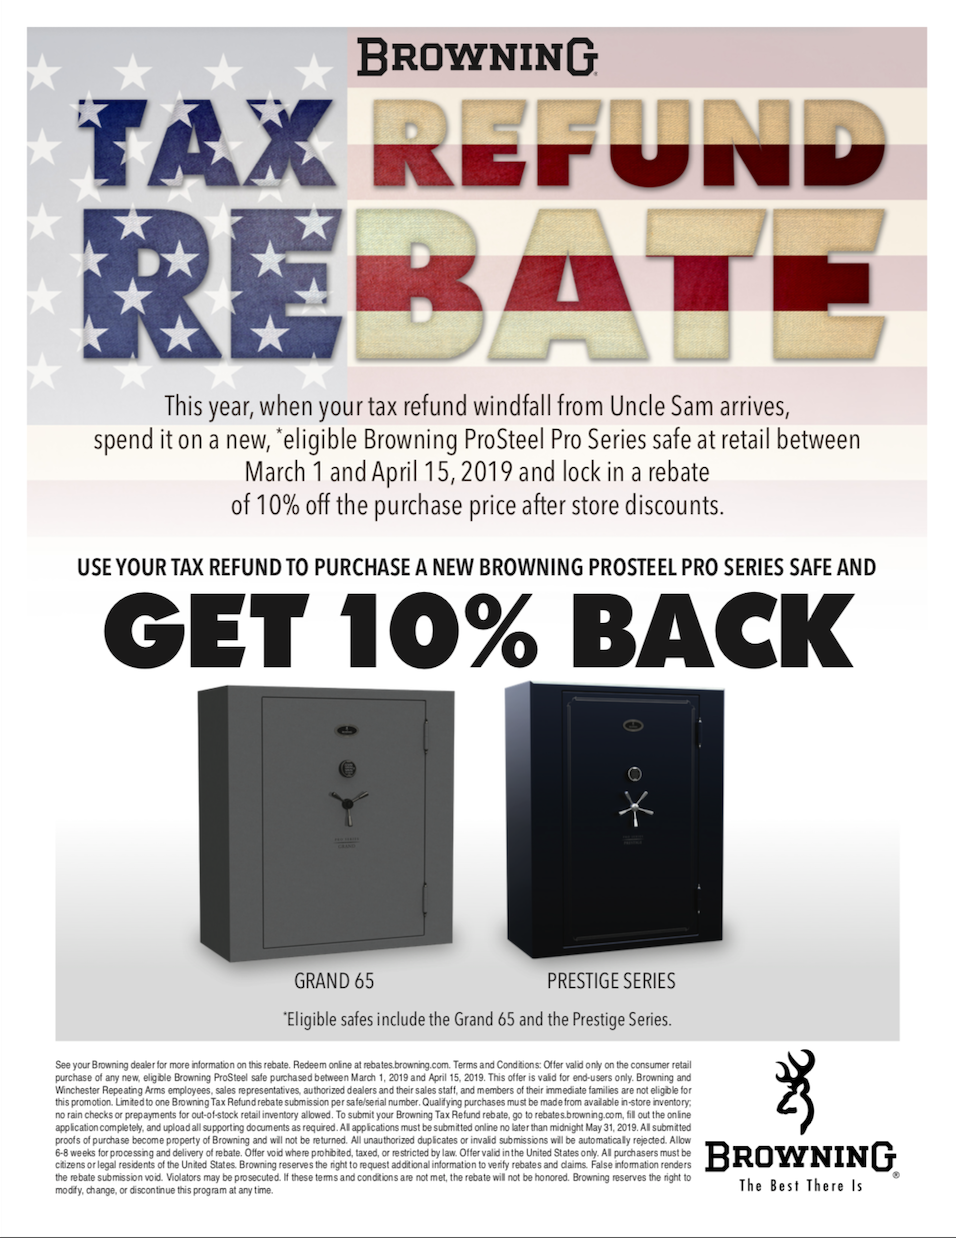 browning-safe-tax-refund-rebate-sale-the-safe-house-atlanta-ga